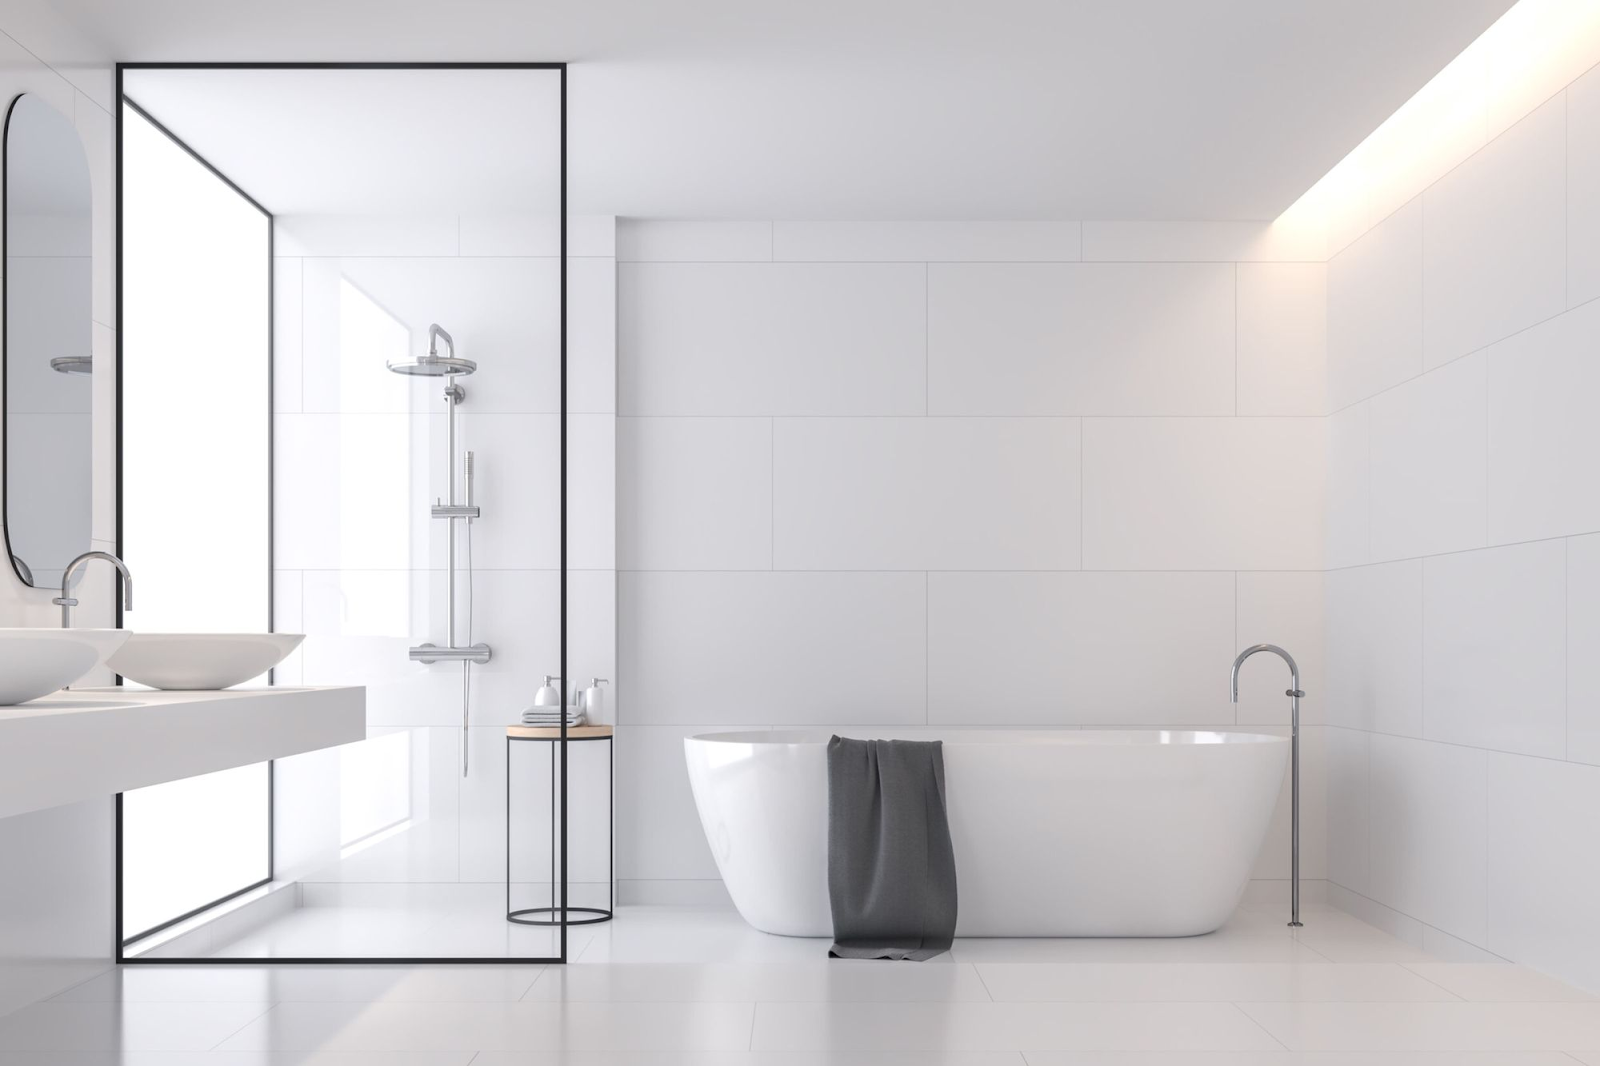 20 Amazing Bathroom Lighting Ideas - Architecture & Design  Bathroom  ceiling light, Bathroom lighting design, Bathroom ceiling